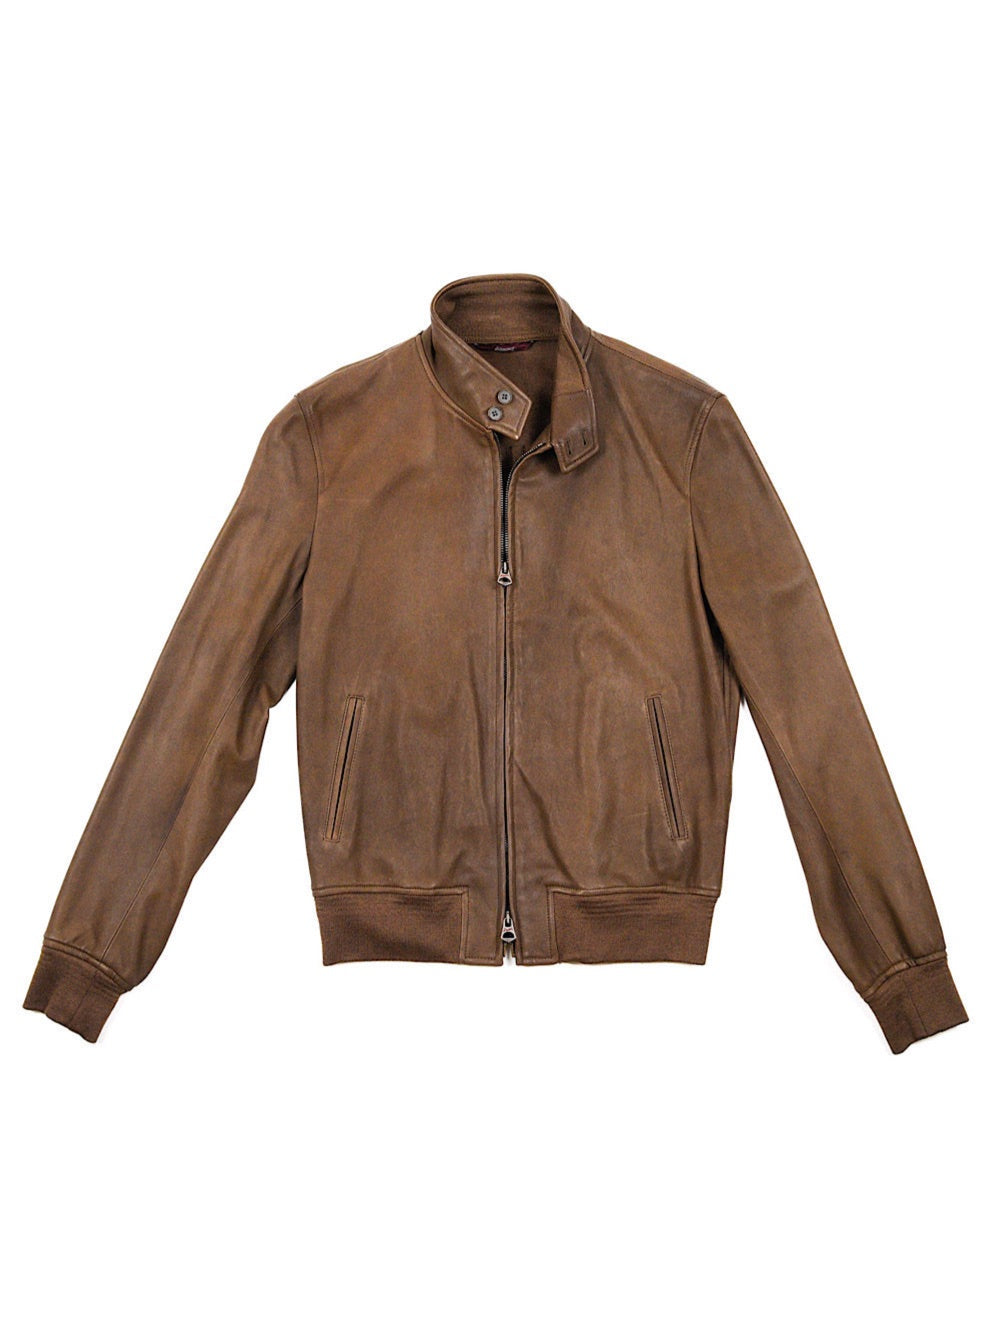 Stewart Etere jacket unlined in mud leather